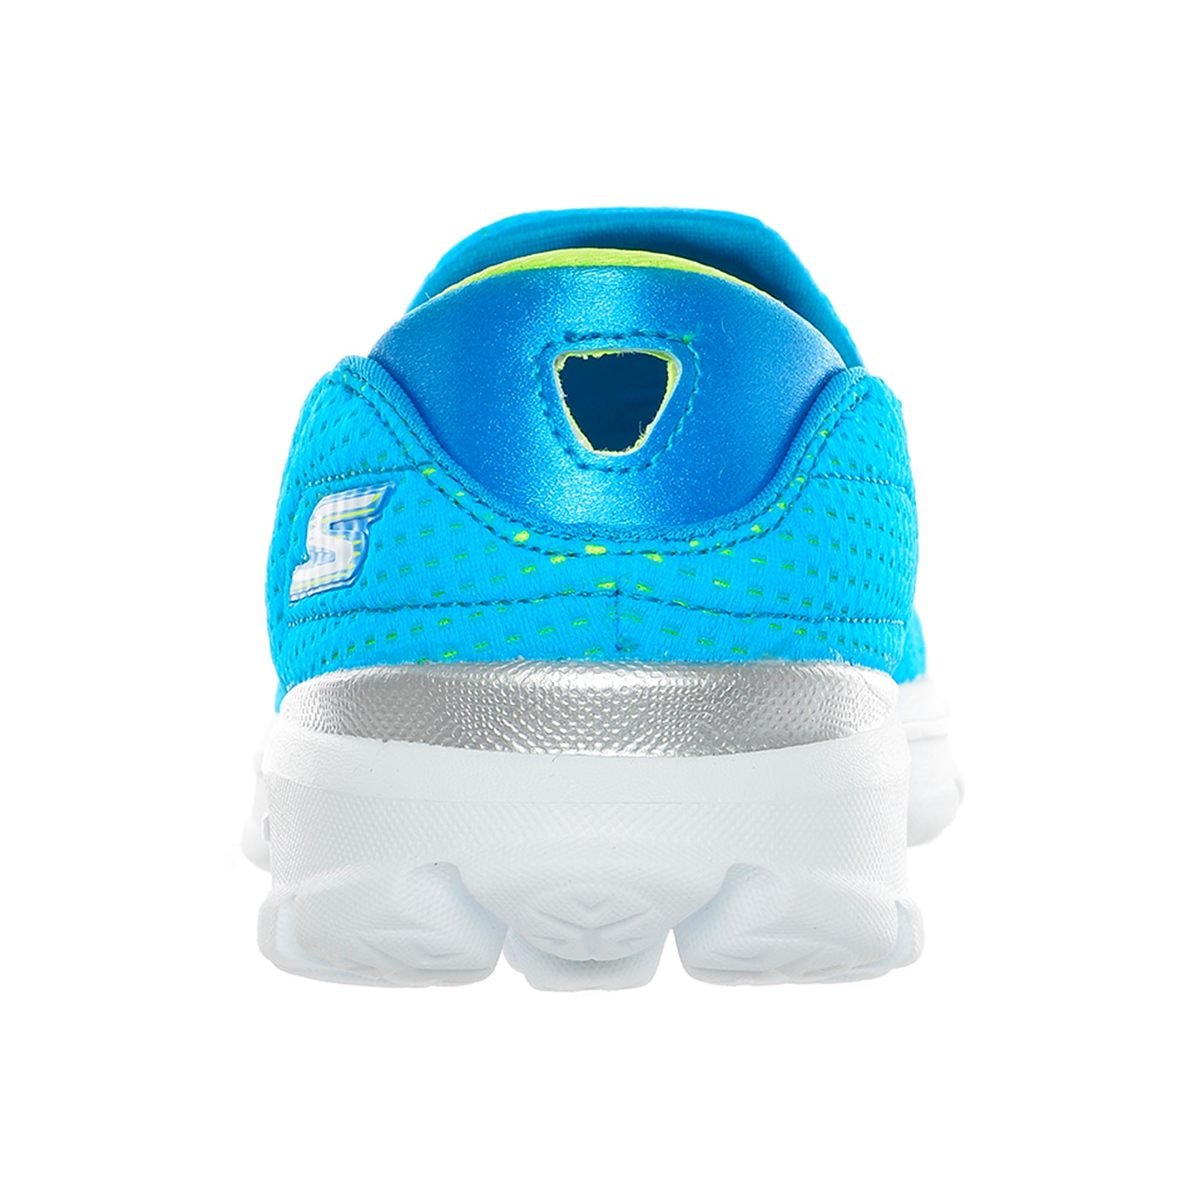 Skechers Women's Sports Shoes 14047TURQ Turquoise 36